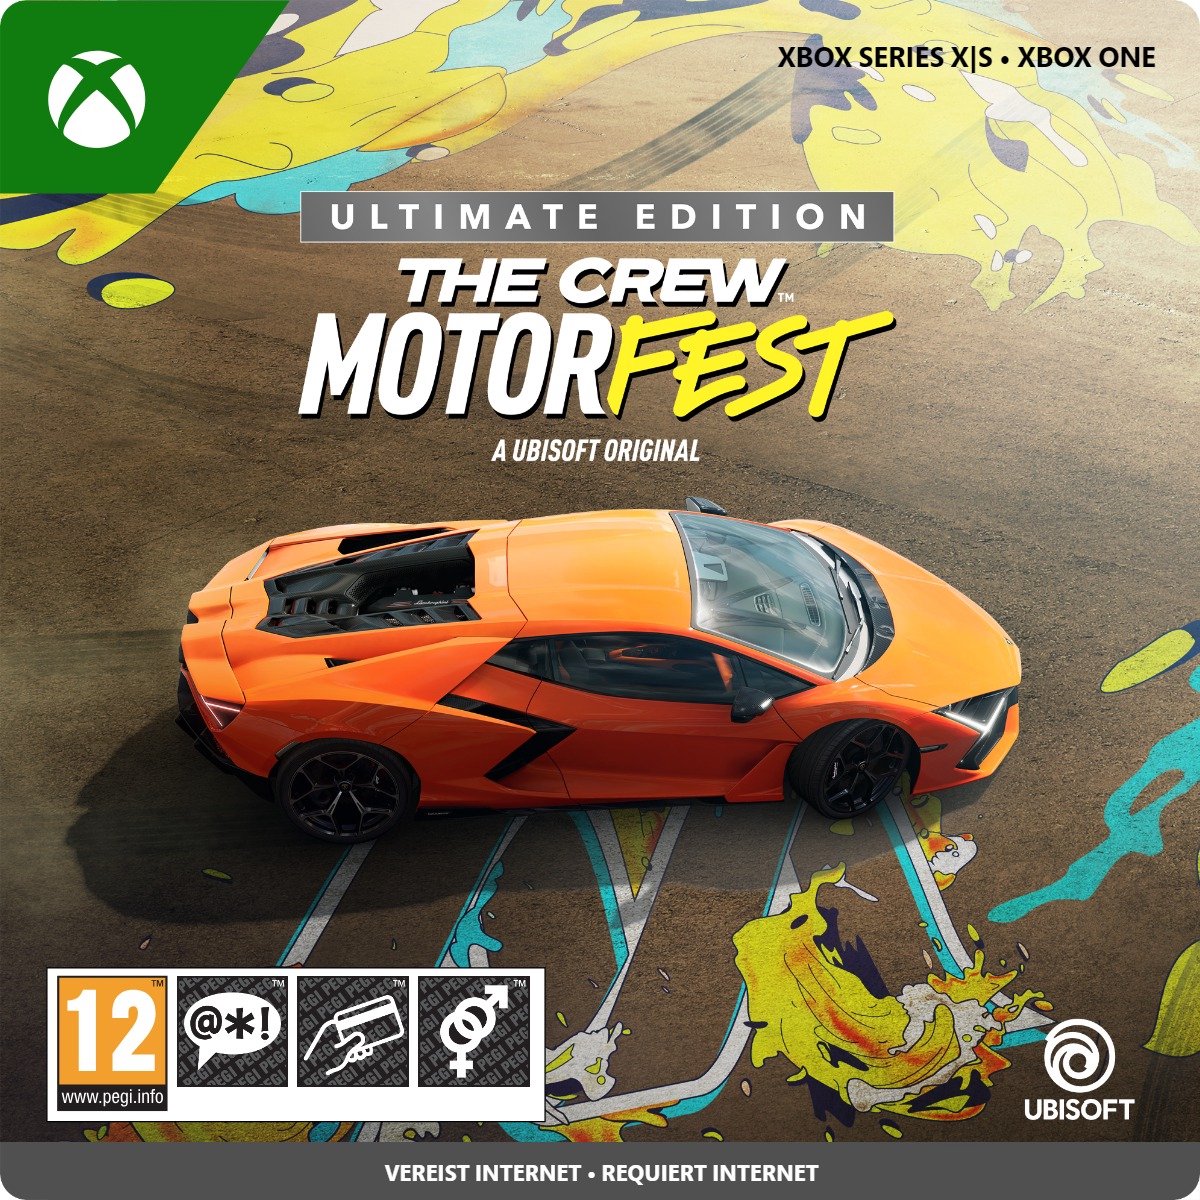 The Crew: Motorfest - Ultimate Edition (Xbox Series X Download) (Xbox Series X), Ubisoft